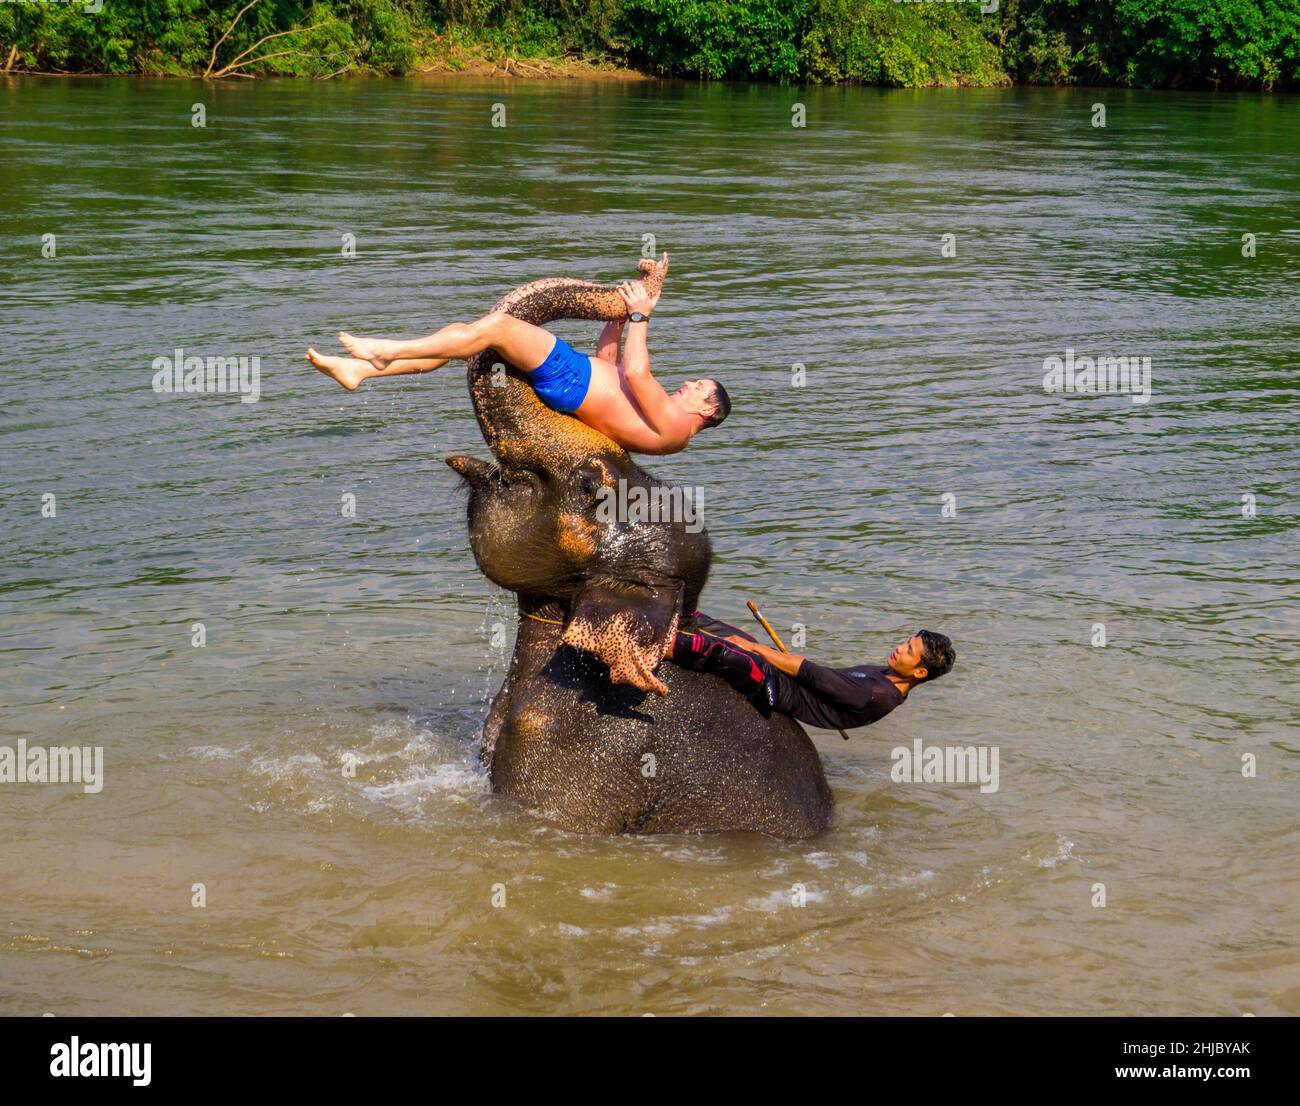 Kanchanaburi, Thailand - January 4, 2020: Tourists swimming with elephant in the Mahawangchang Elephant Camp. Stock Photo